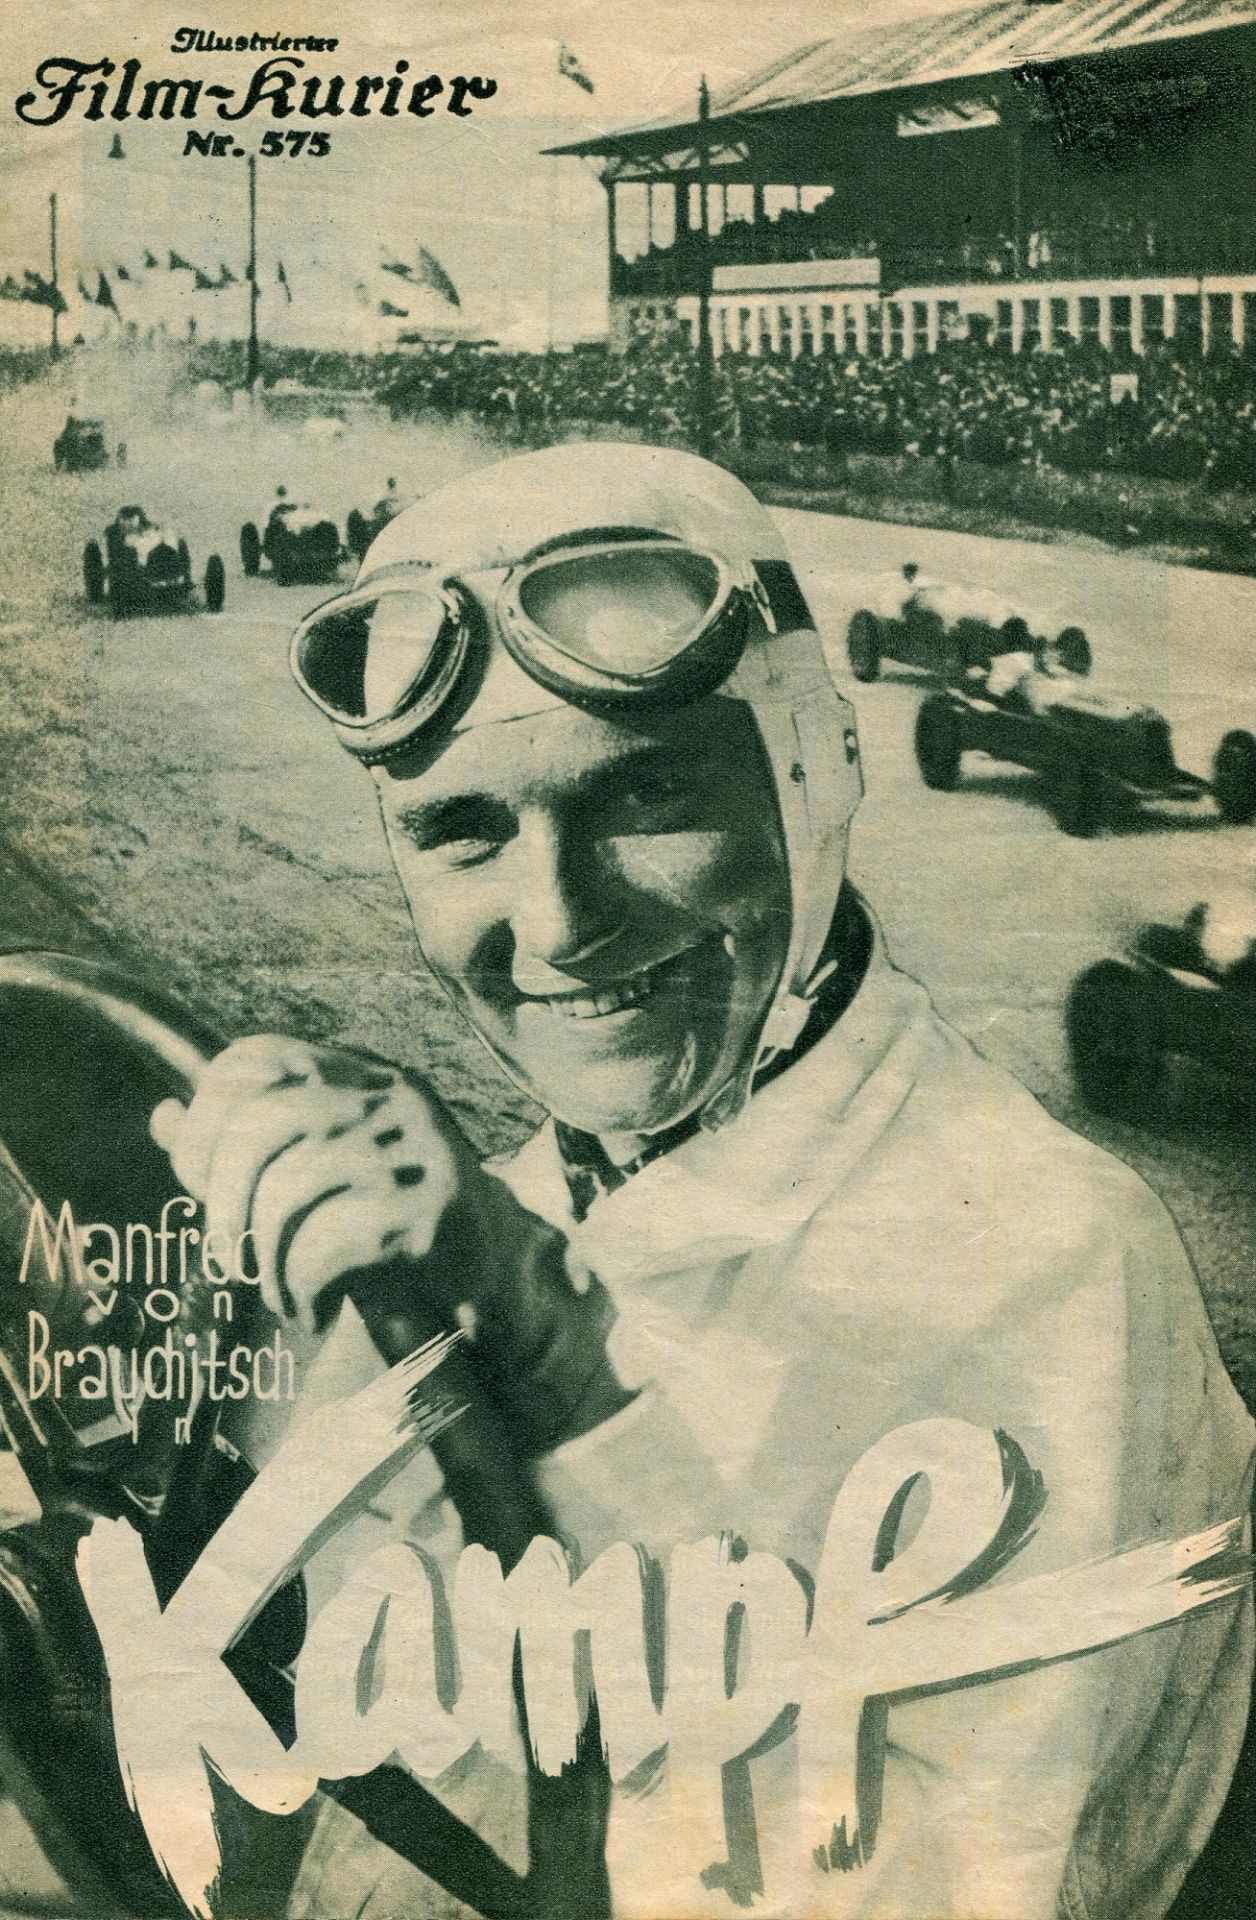 BRAUCHITSCH MANFRED VON: (1905-2003) German motor racing driver of the 1930s. - Image 2 of 2